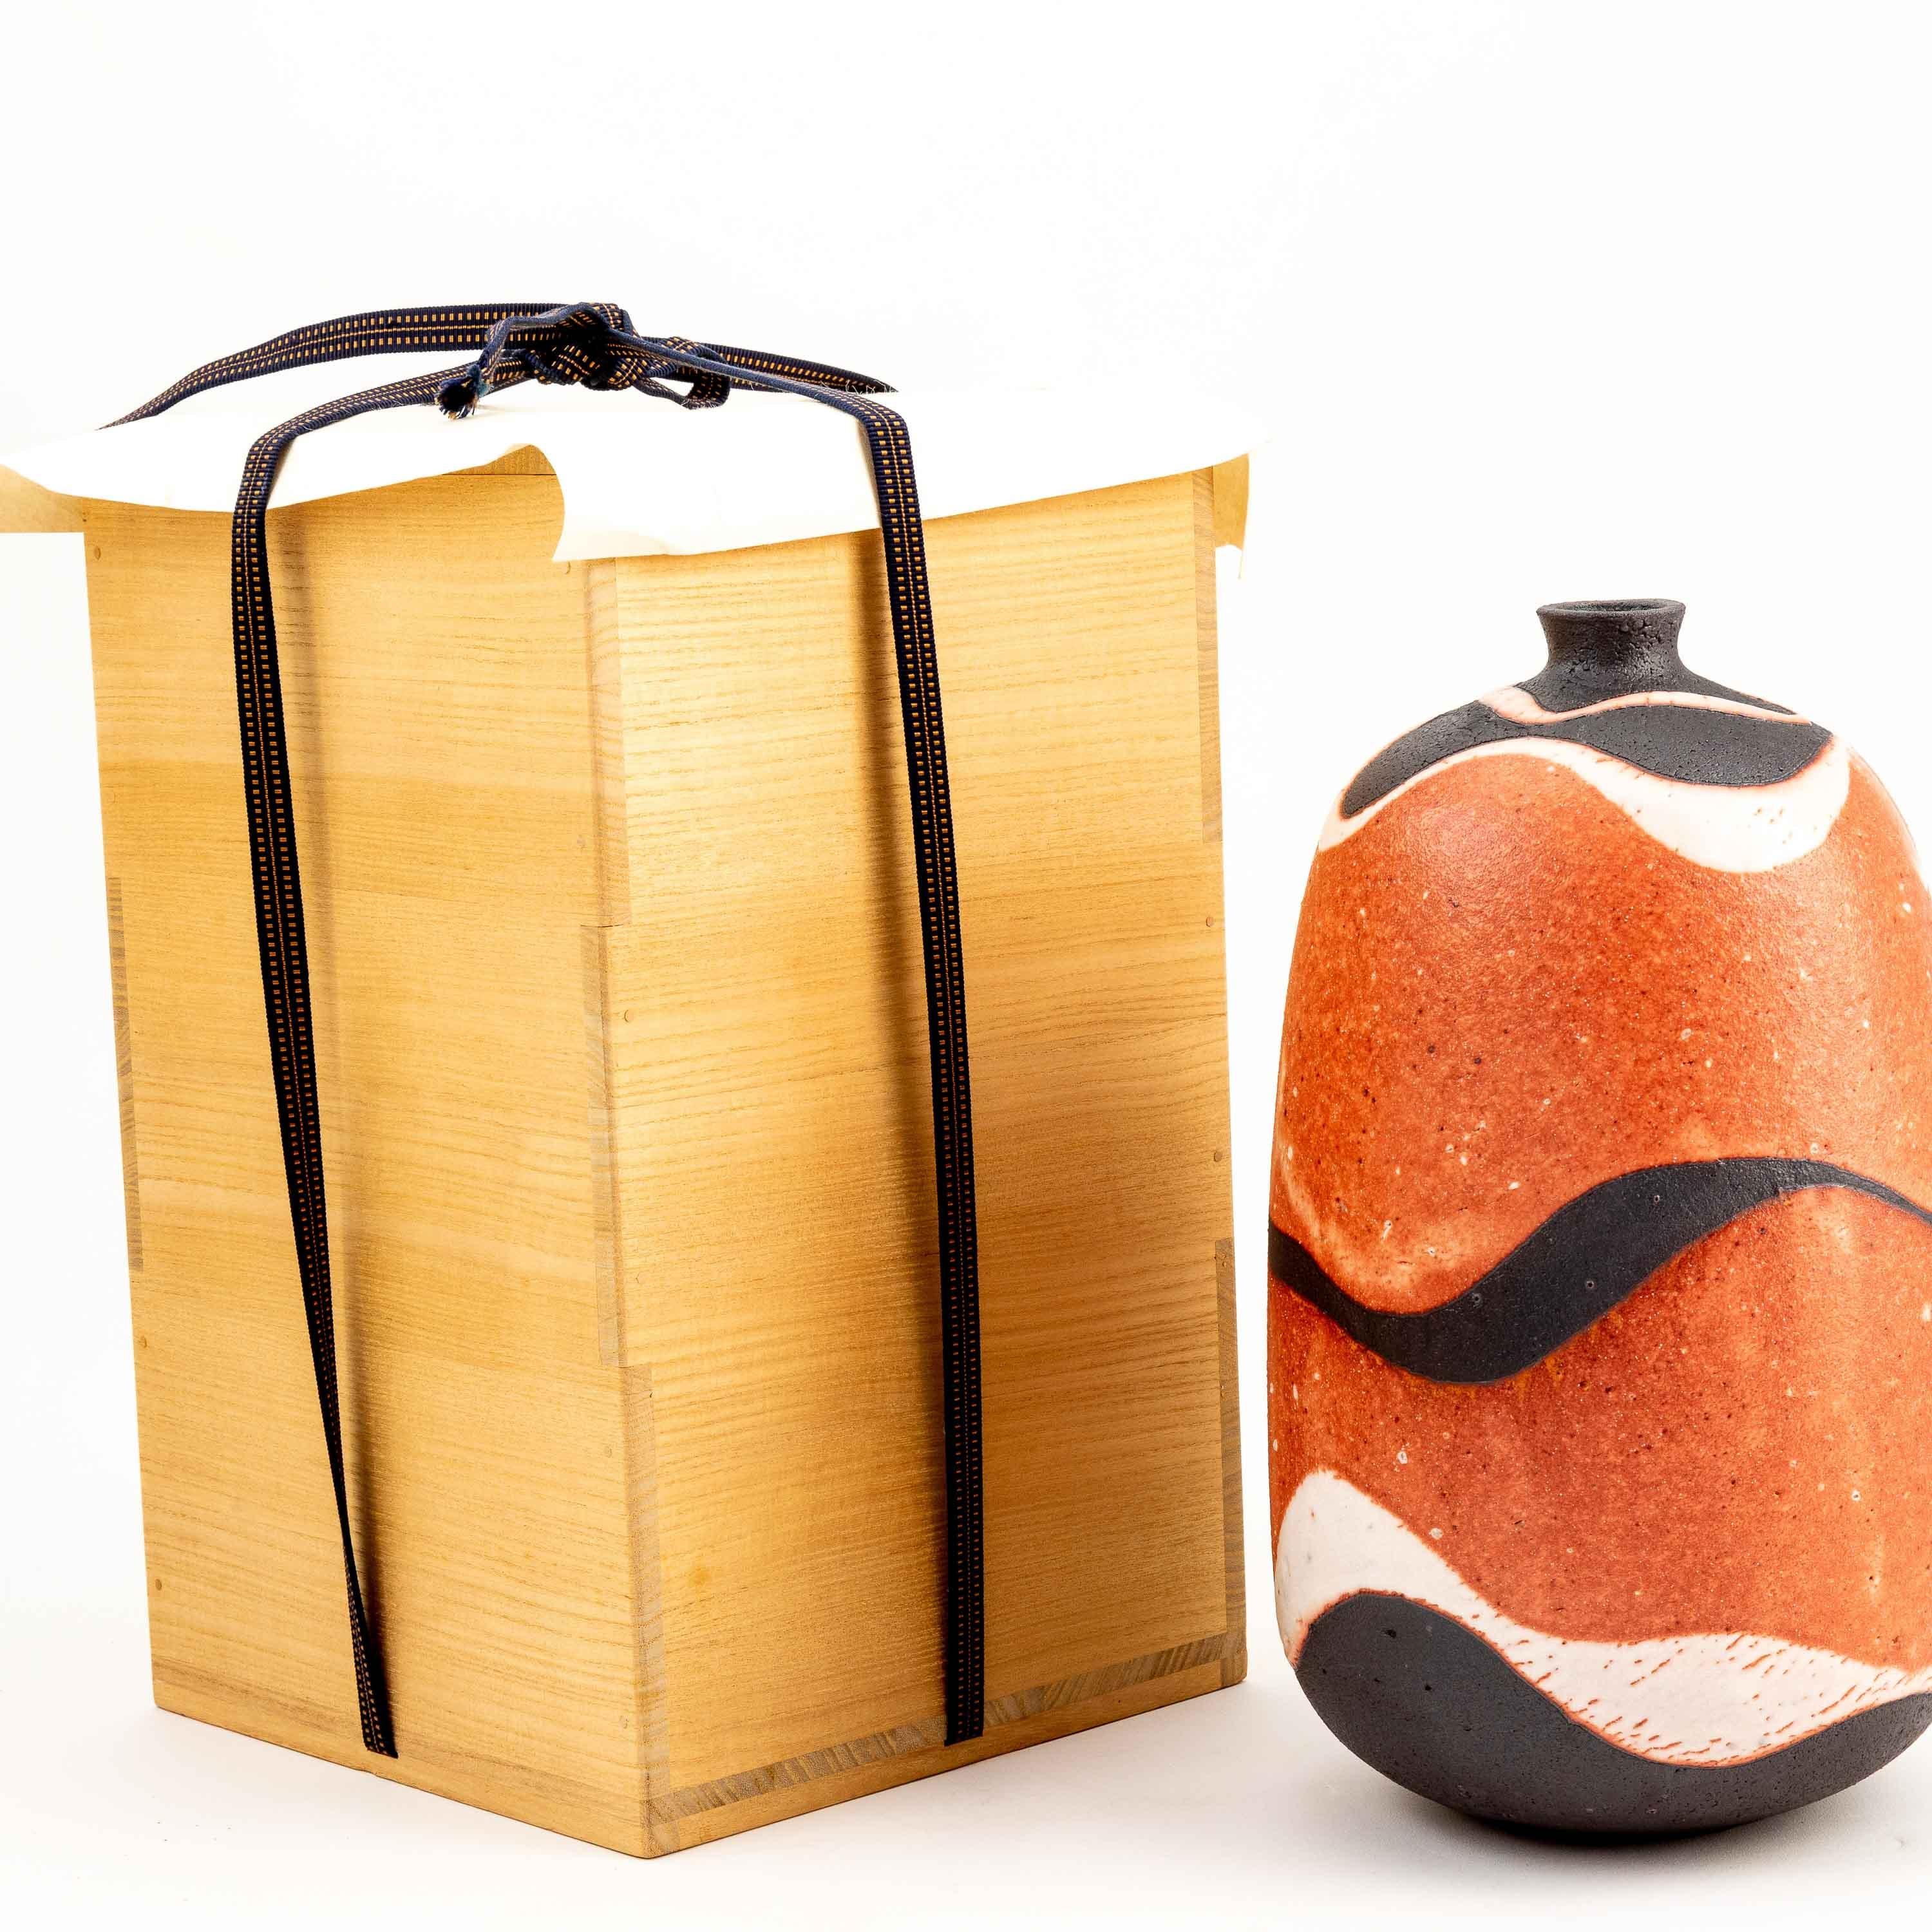 Shino pottery vase in deep murasaki and white by contemporary Japanese ceramic artist Tamaoki Yasuo. The vase is an iconic representation of his style. It comes with an original paulownia wood storage box.

Tamaoki Yasuo (b. 1941) in Tajimi. He